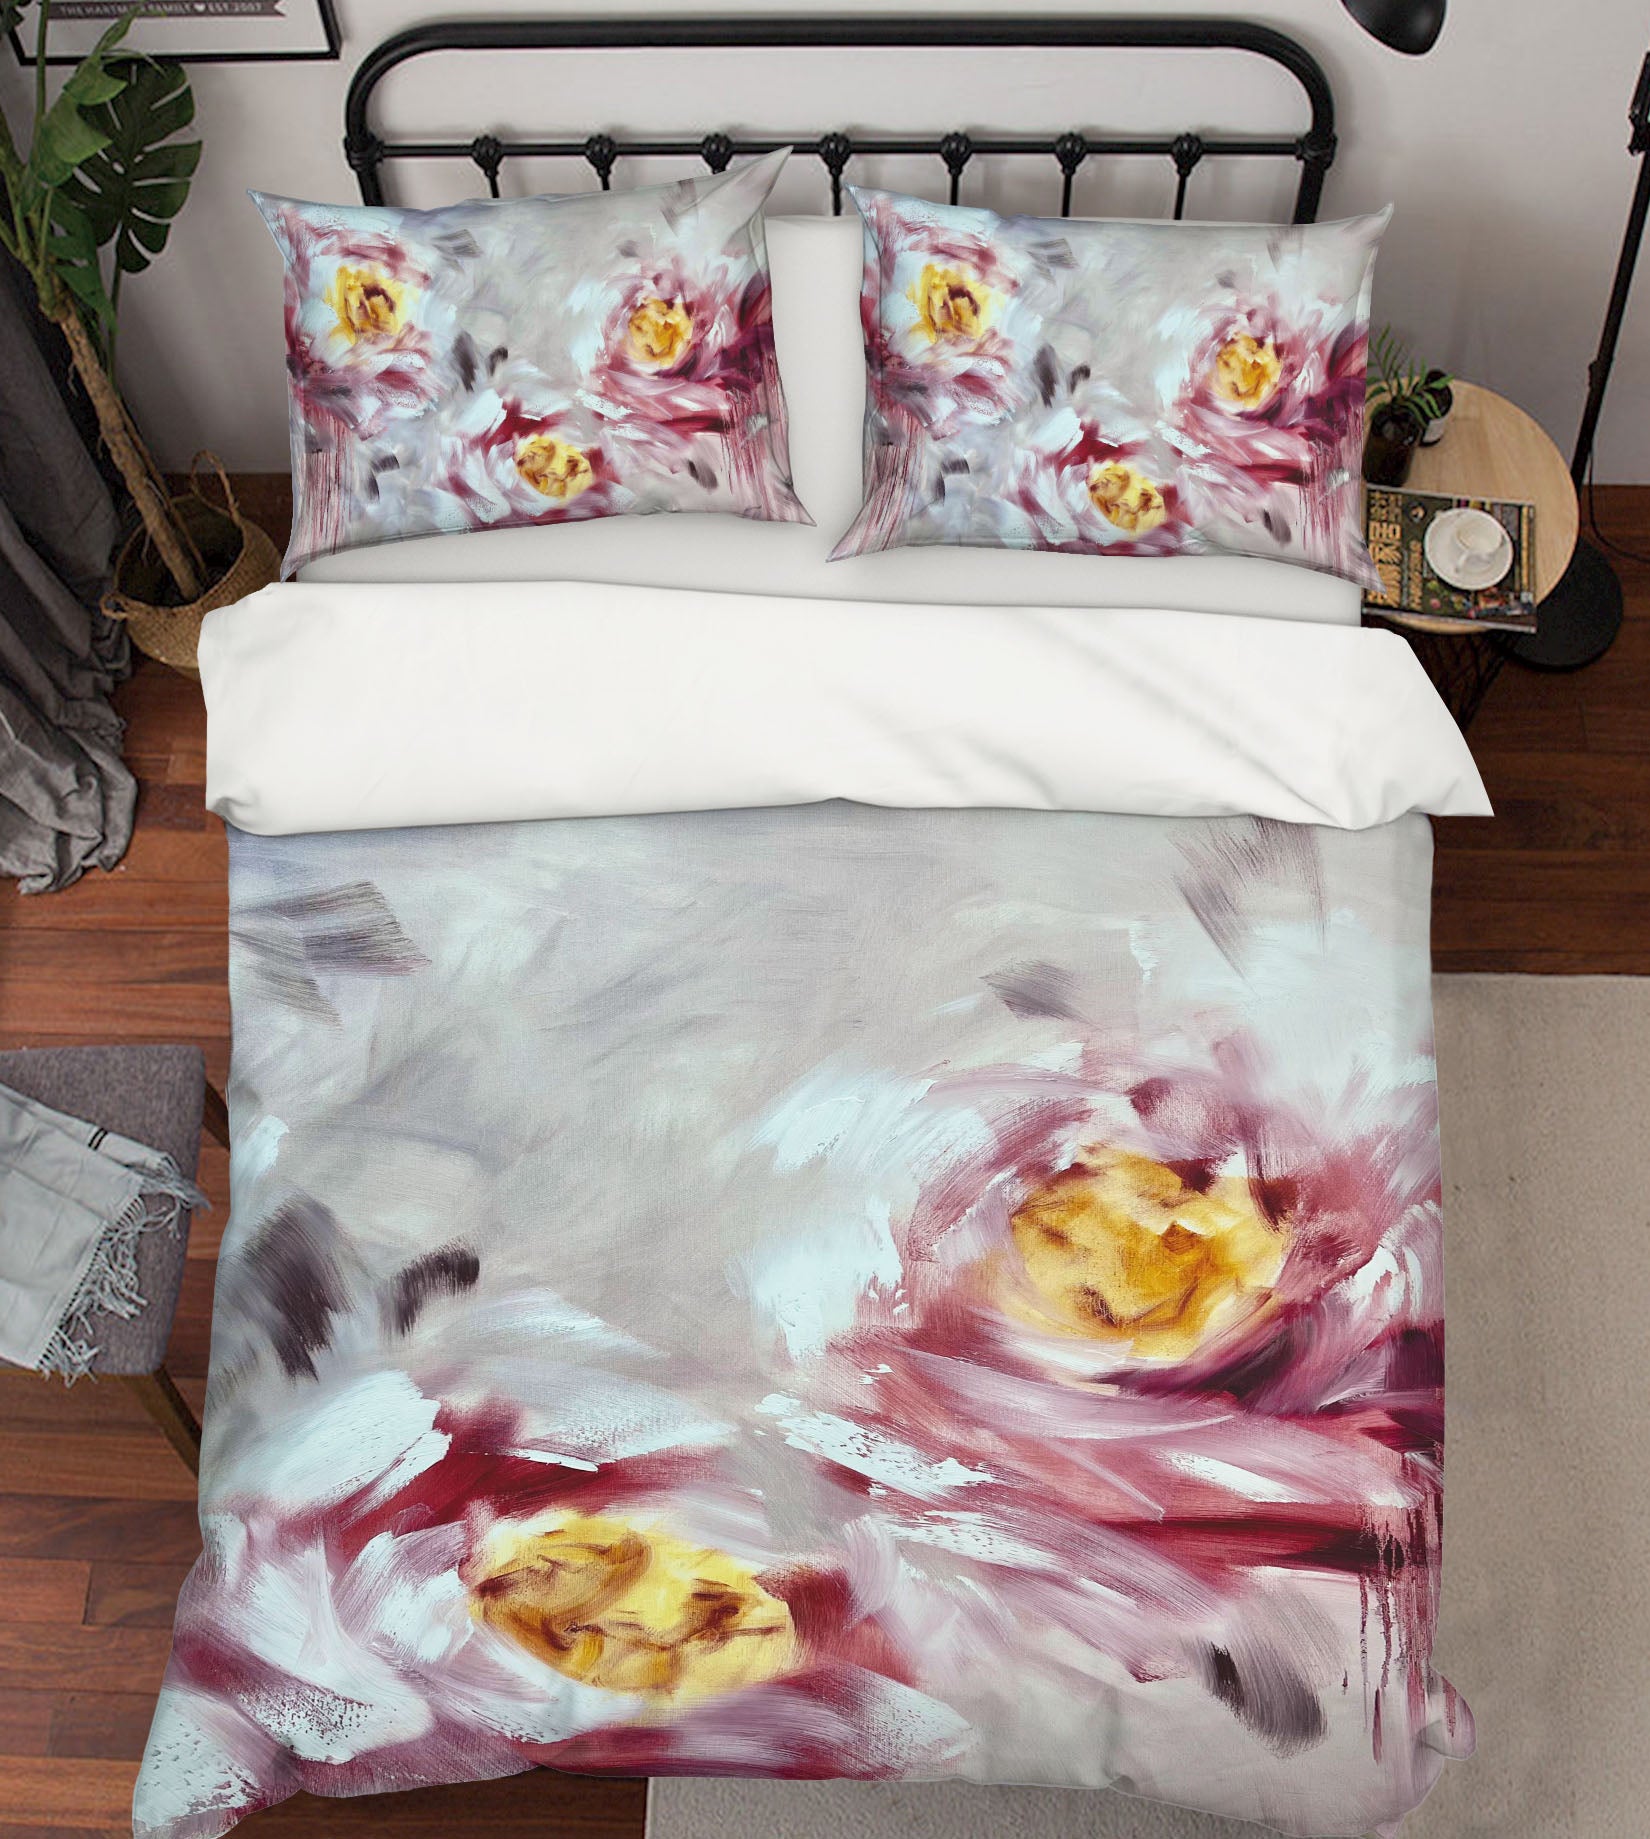 3D Painted Flowers 3134 Skromova Marina Bedding Bed Pillowcases Quilt Cover Duvet Cover